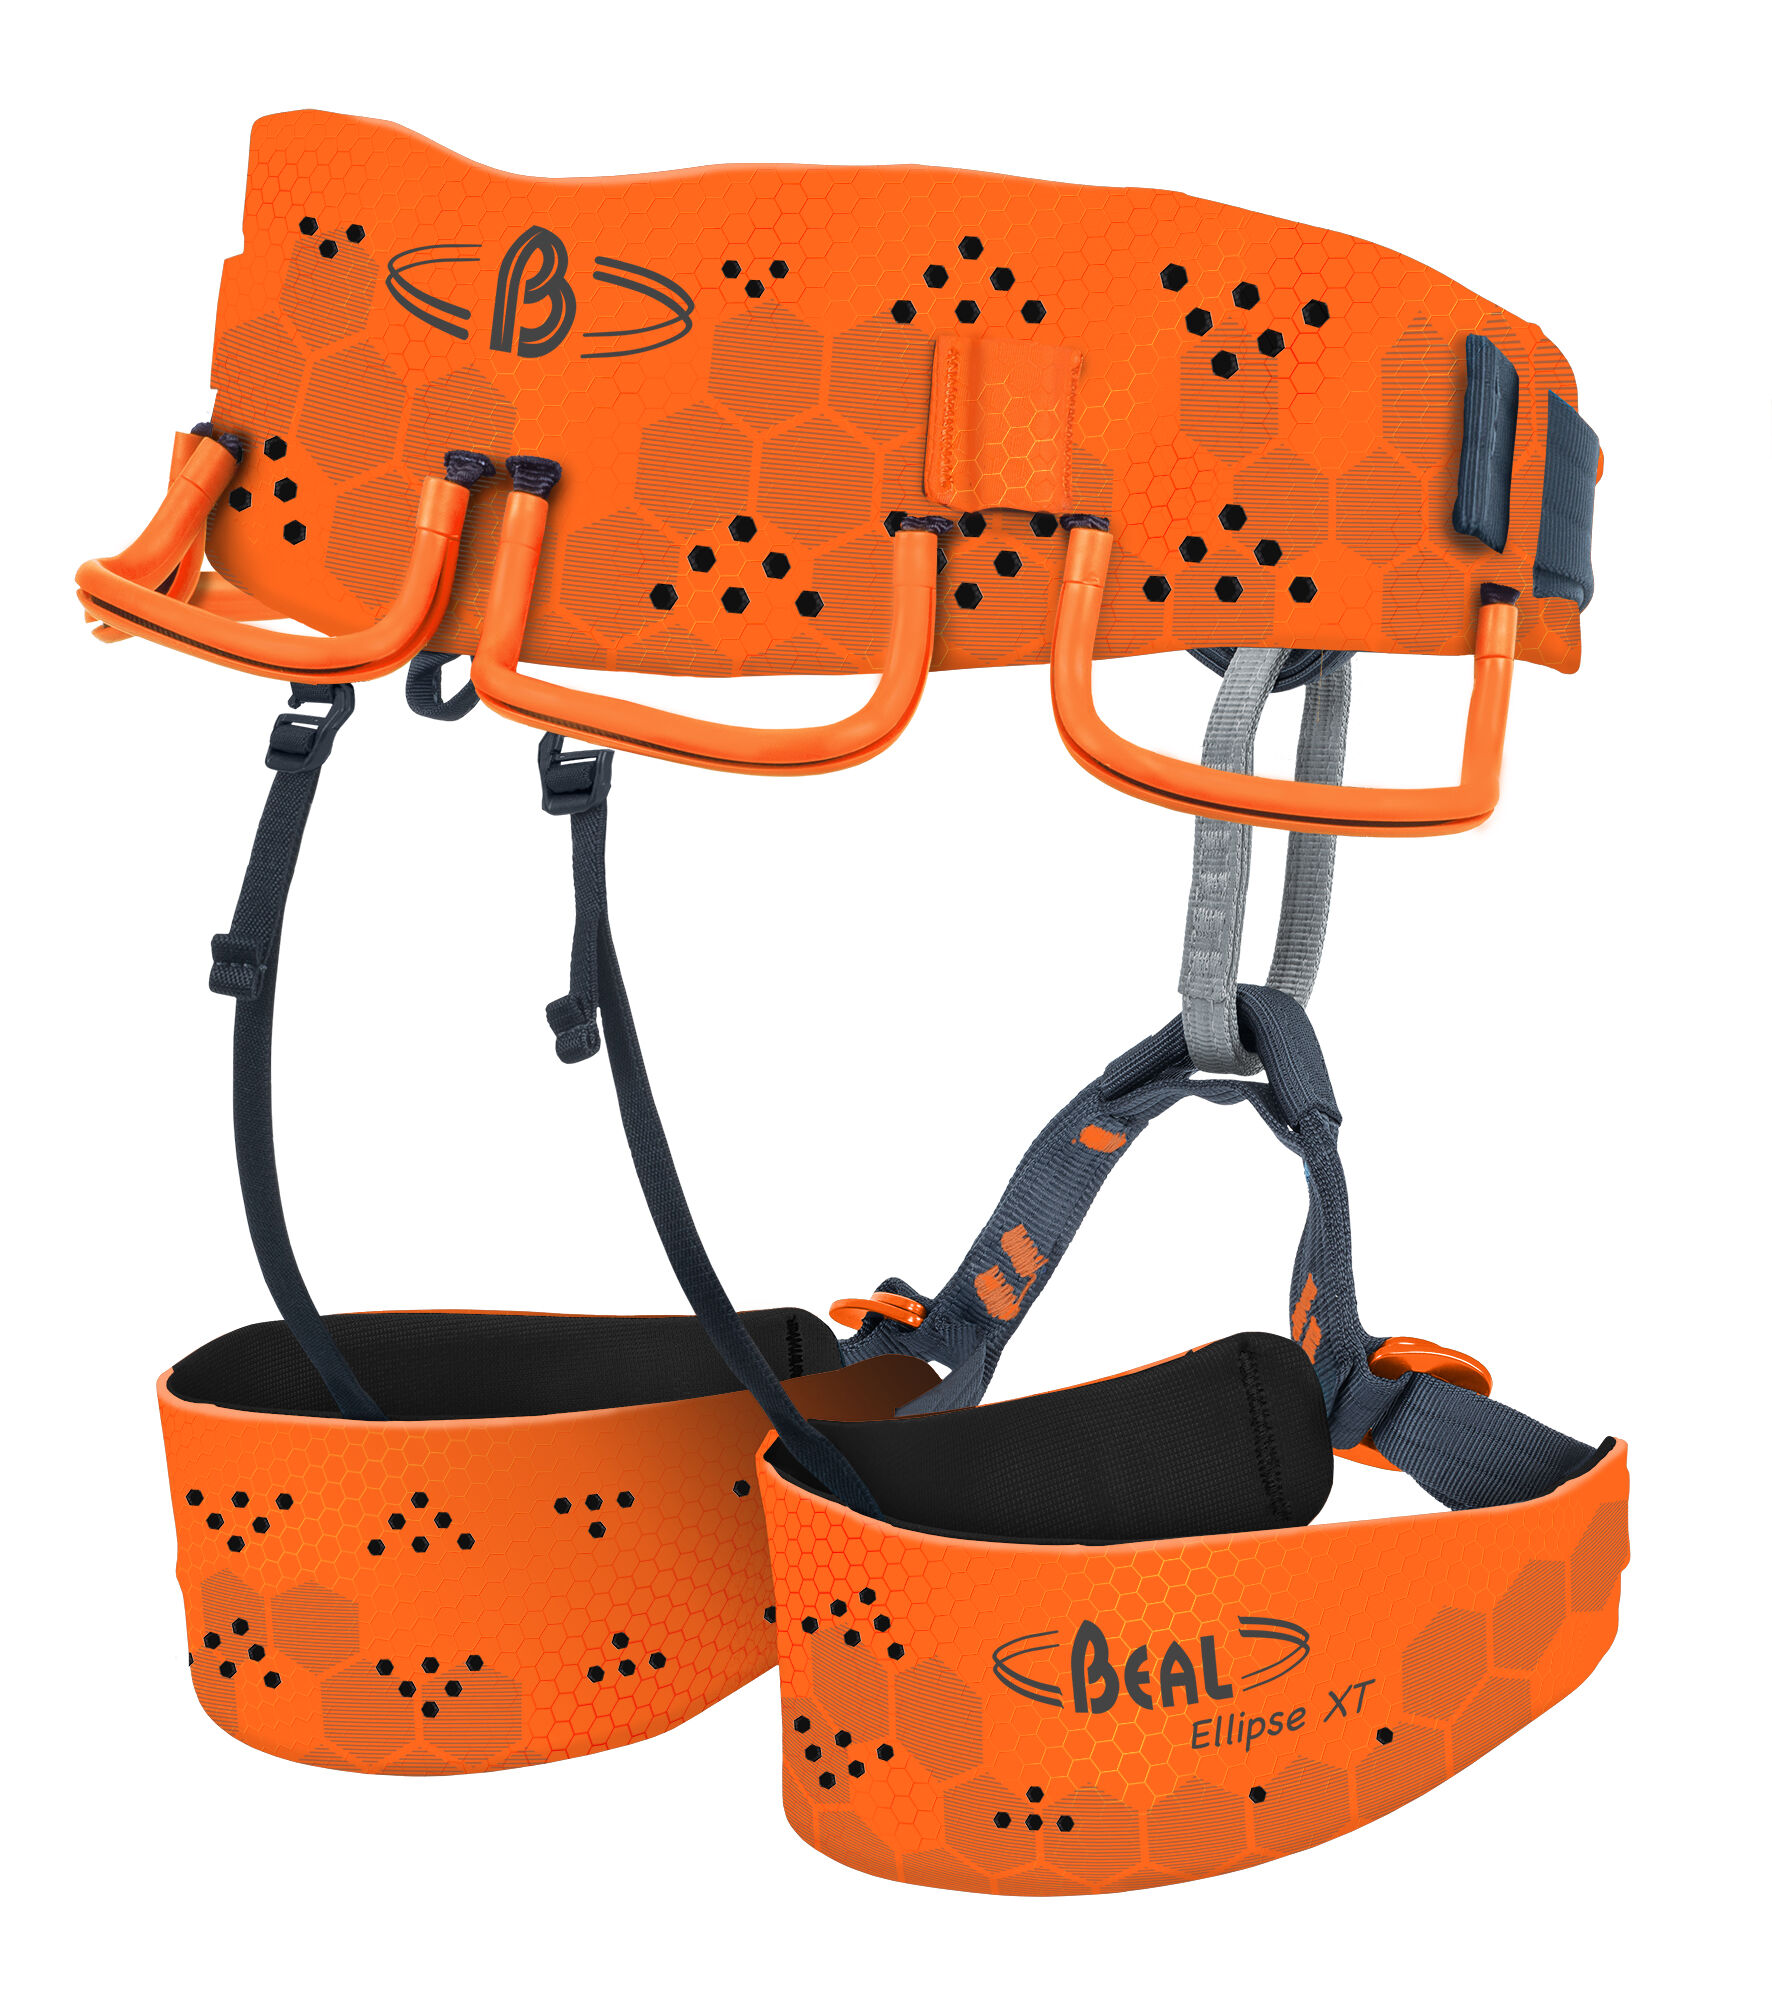 Beal - Ellipse XT - Imbrago arrampicata